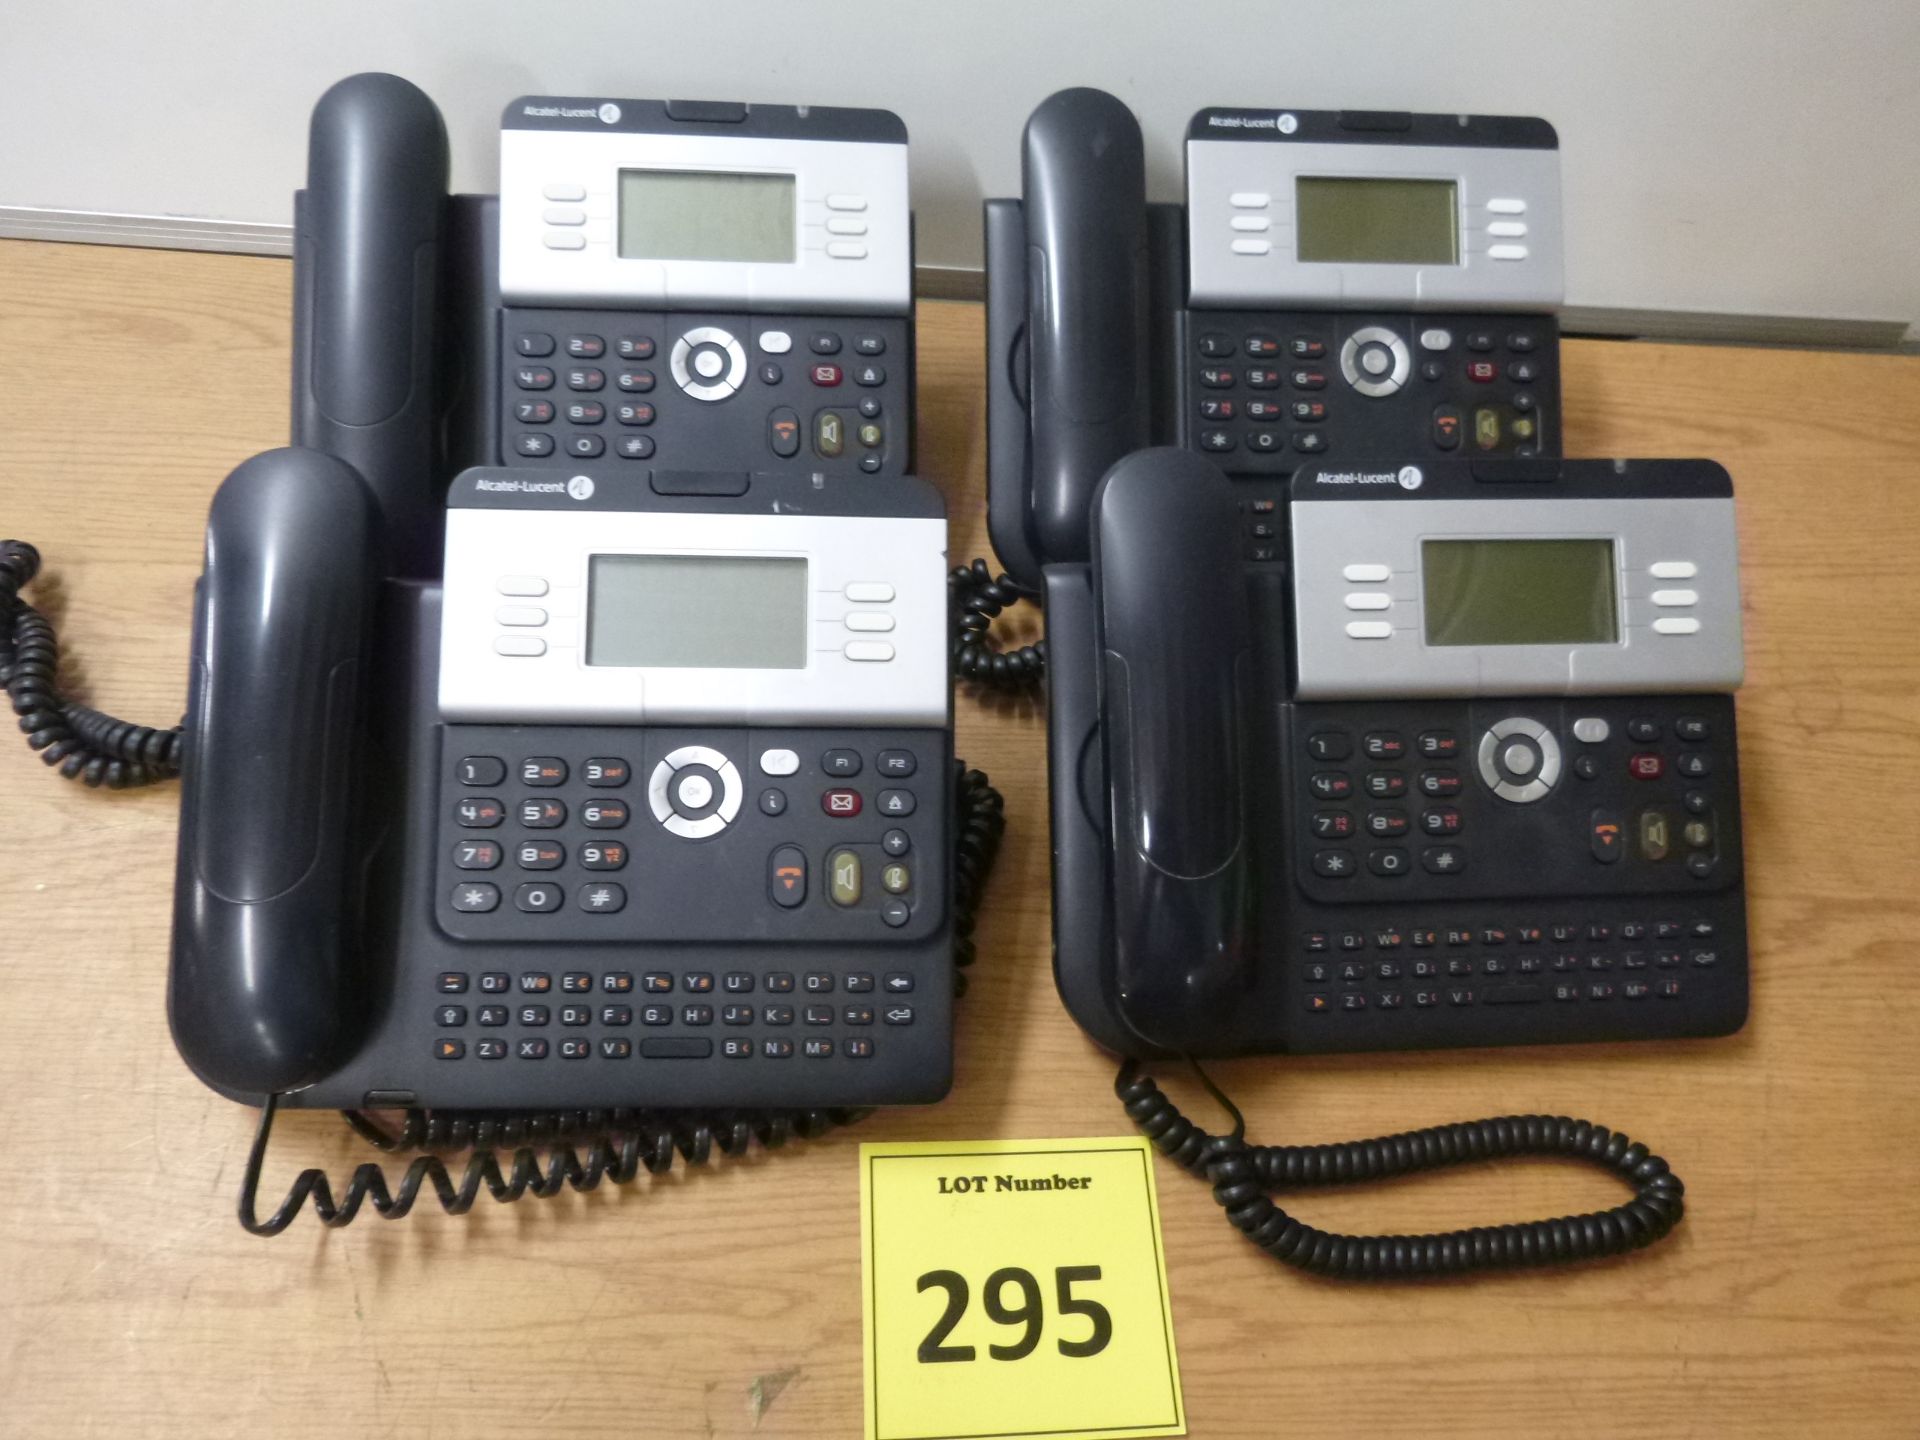 4 x Alcatel Lucent 4029 OMNI PCX Office Telephones inurban grey